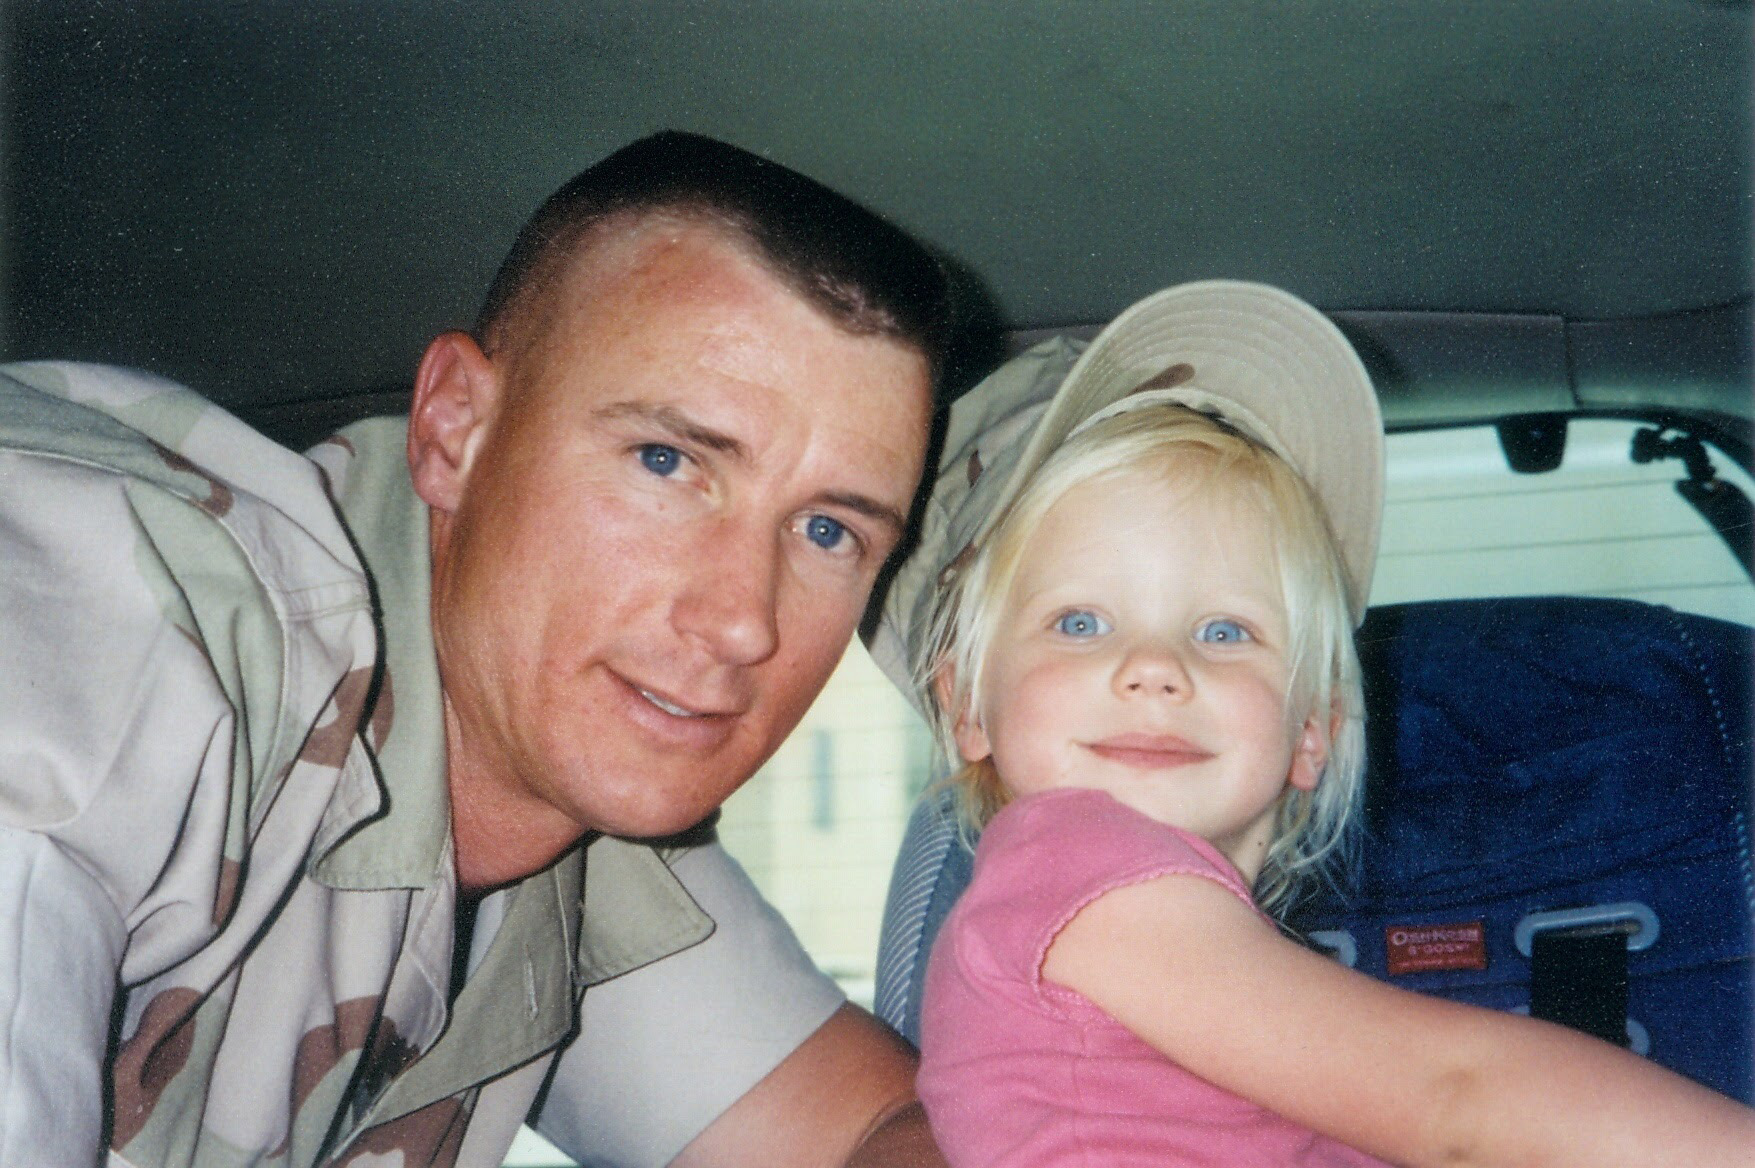 LLNL Gold Star summer intern Caitlin Rowe was four when this photo was taken during her last visit with her dad, U.S. Marine Capt. Alan Rowe